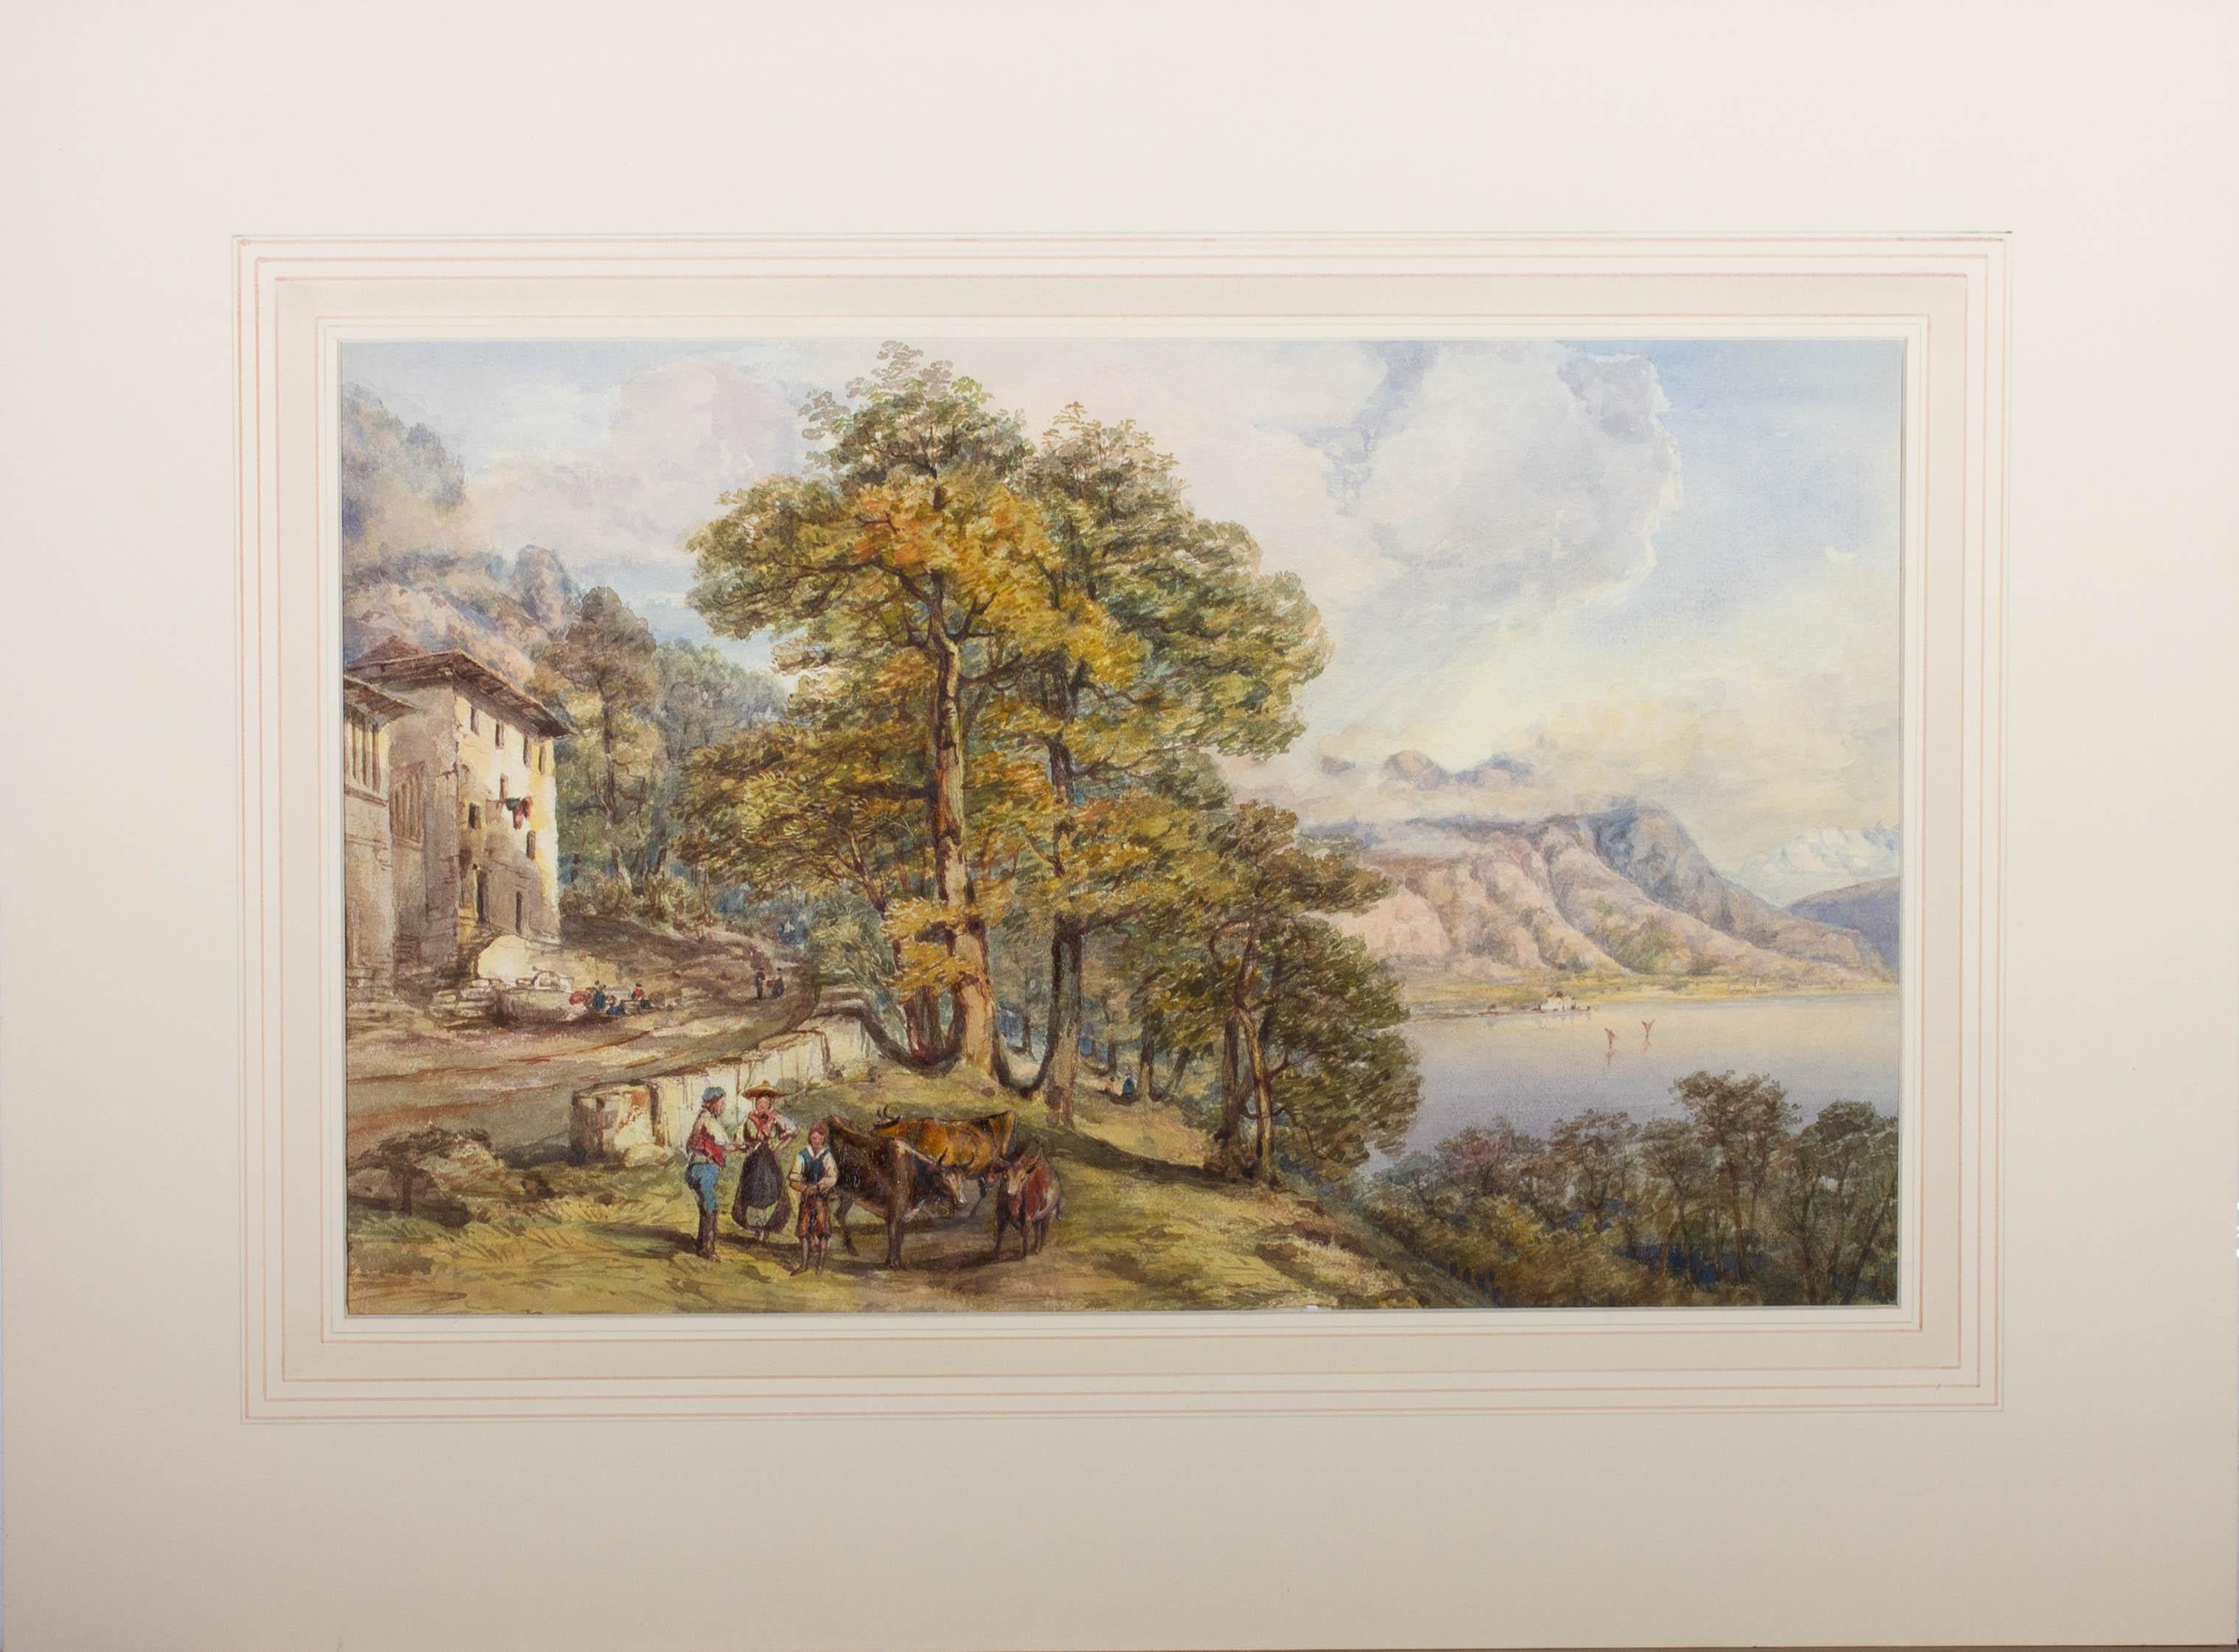 Unknown Landscape Art - 1849 Watercolour - Cattle at Lake Geneva